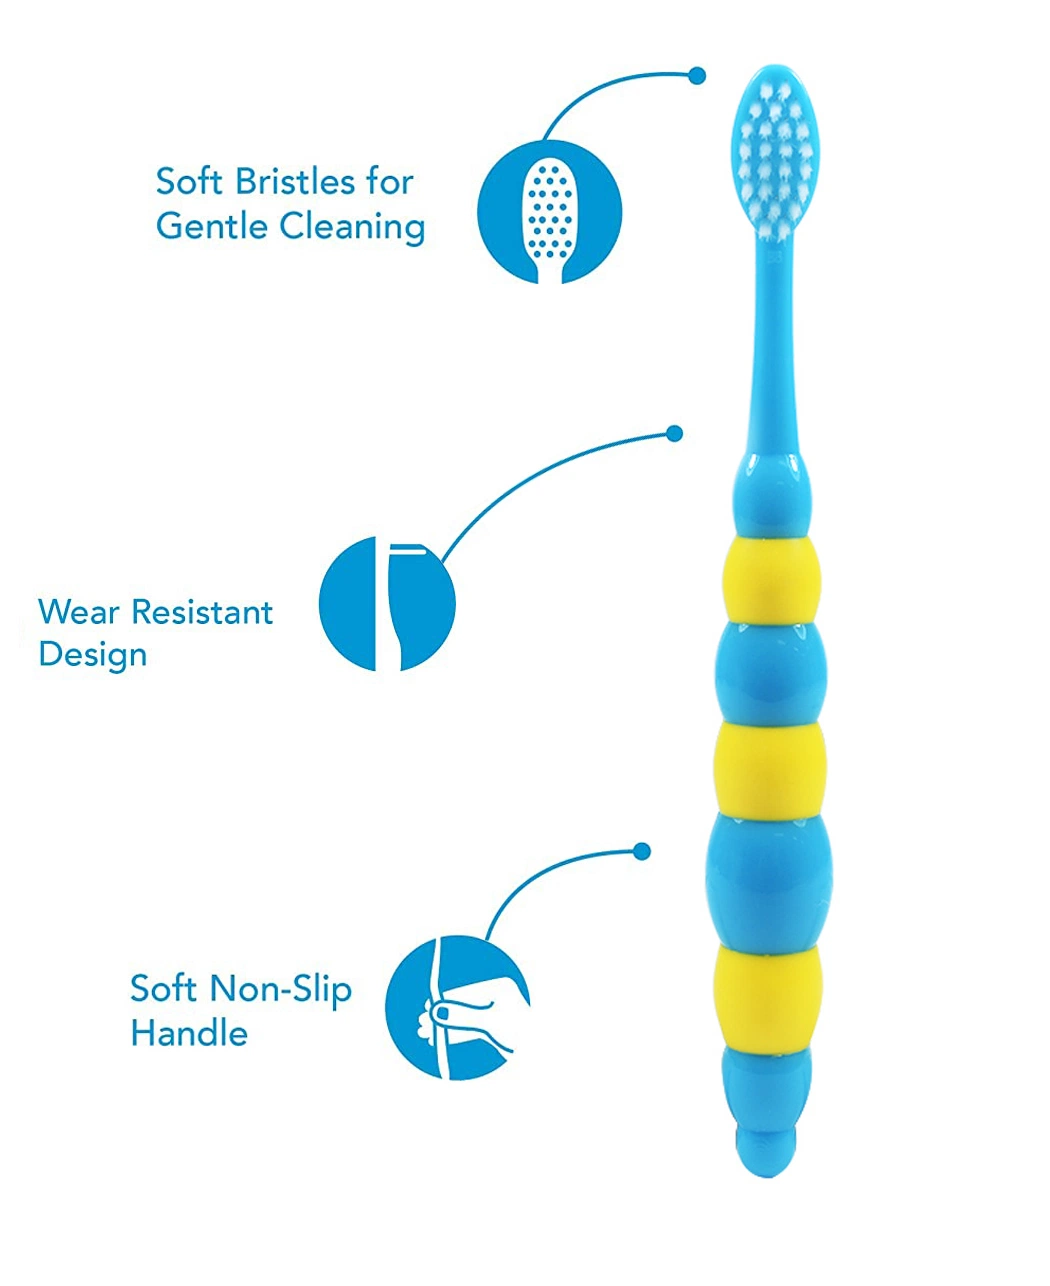 High Quality Cartoon Kids Manual Toothbrush Set Children Toothbrush